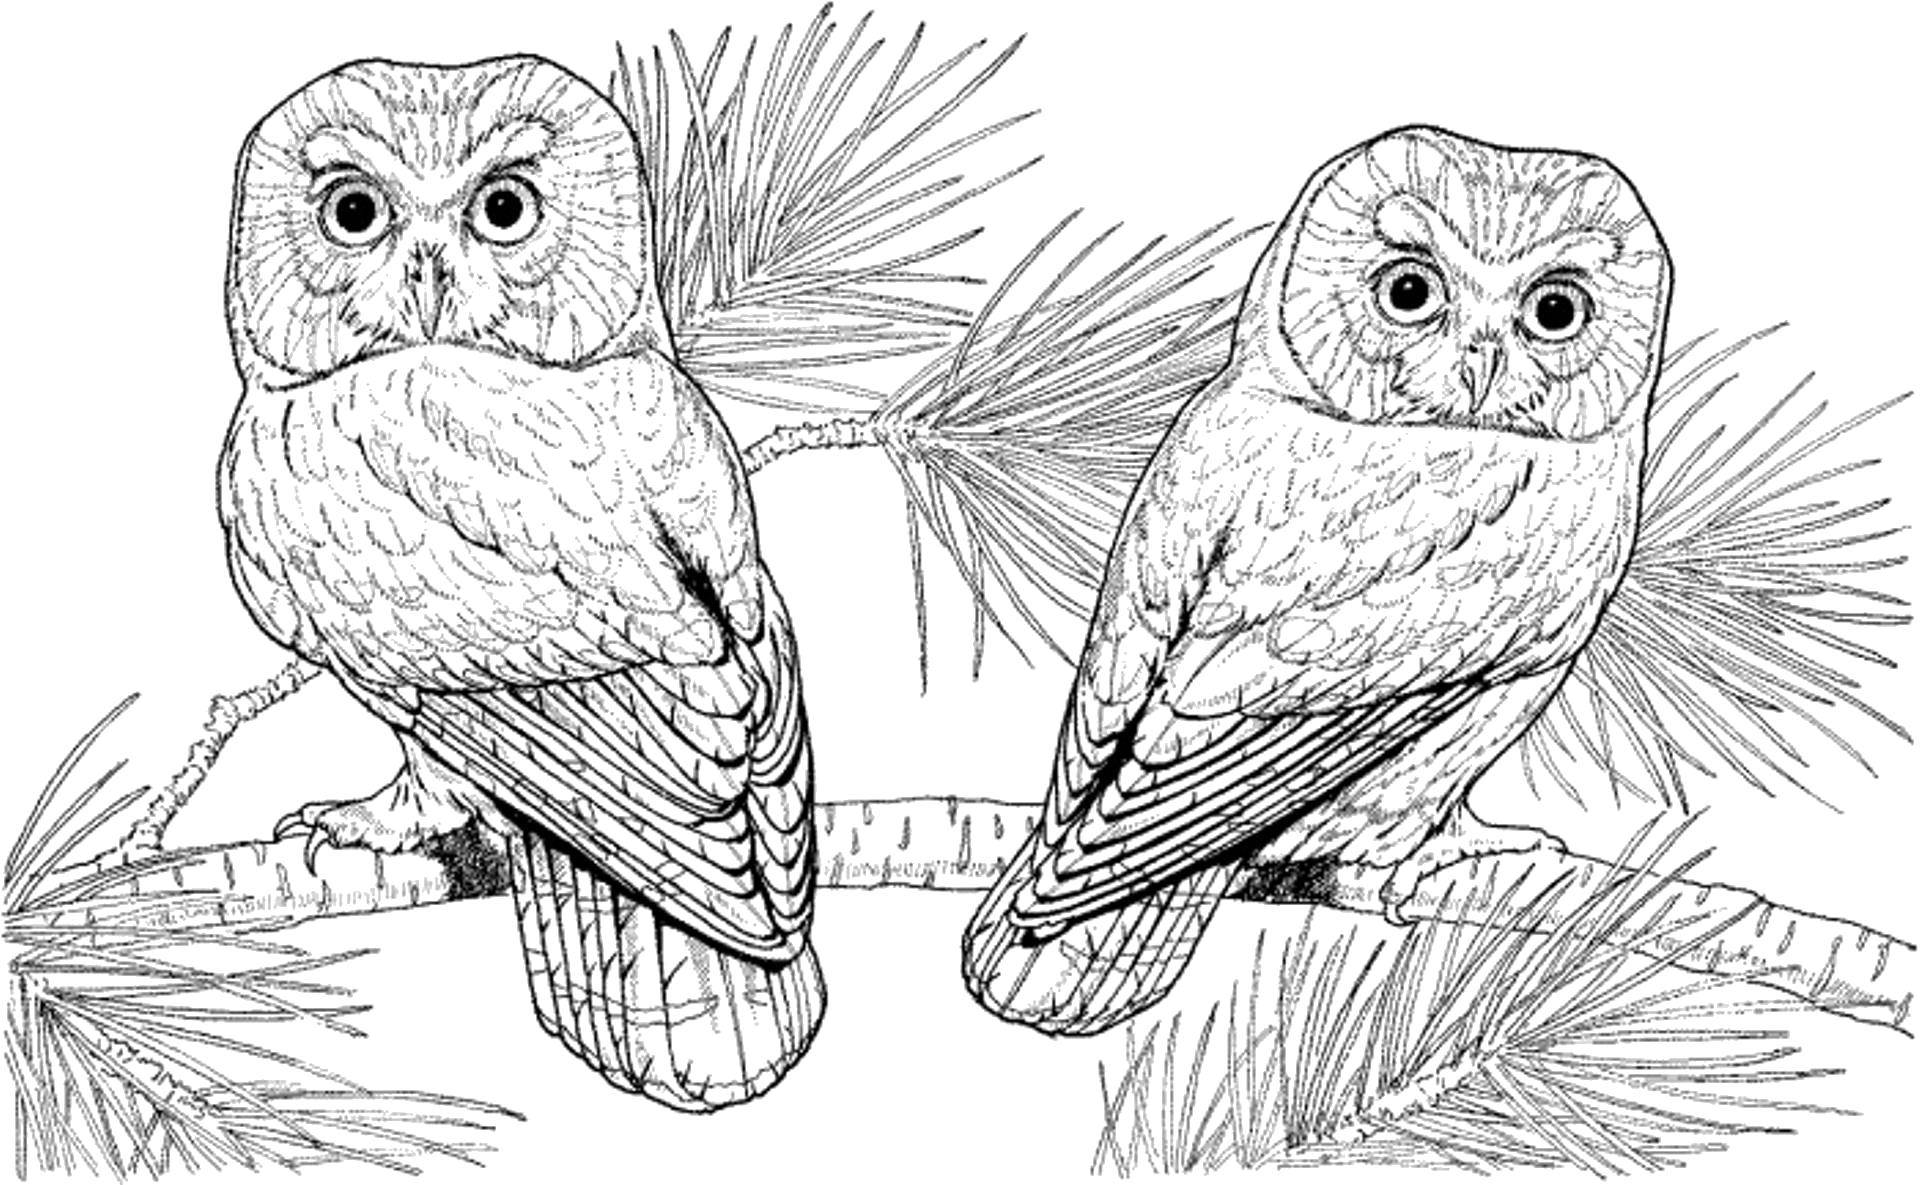 Coloring Owl on a spruce branch. Category birds. Tags:  Birds, owl.